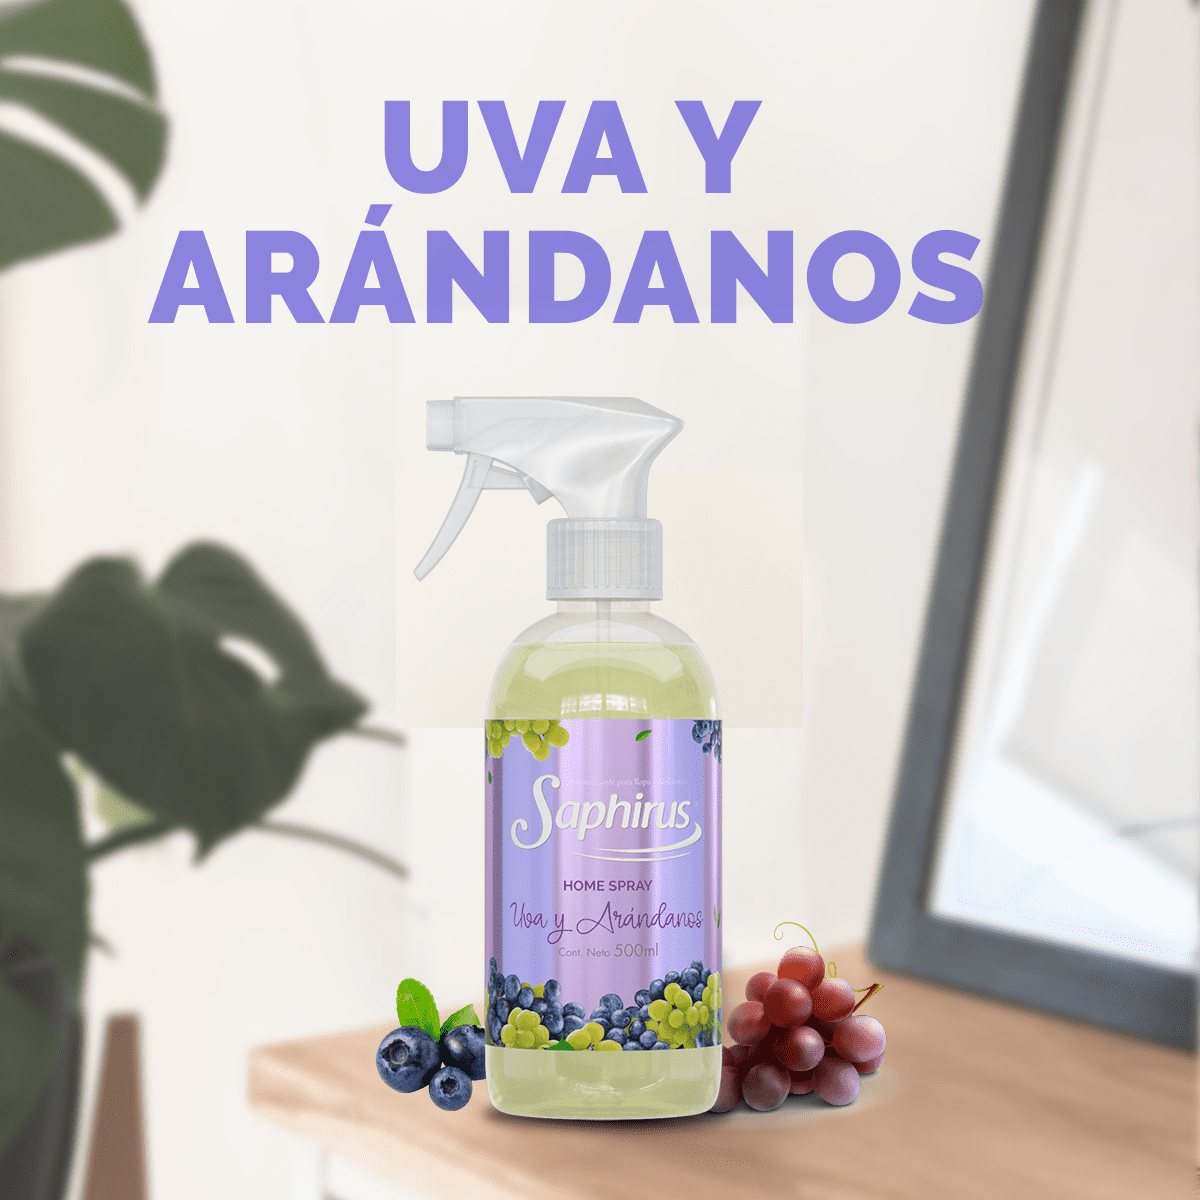 Saphirus Home Spray Uva y Arándanos